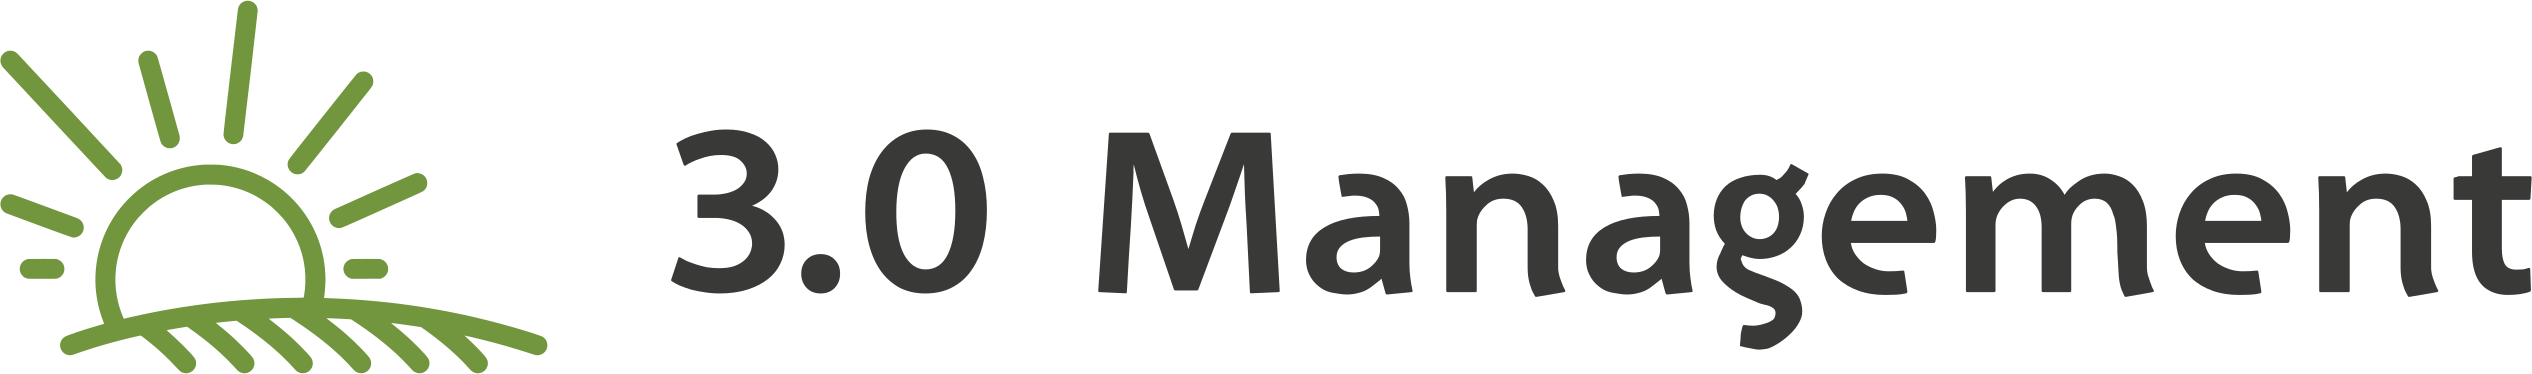 3.0 Management logo